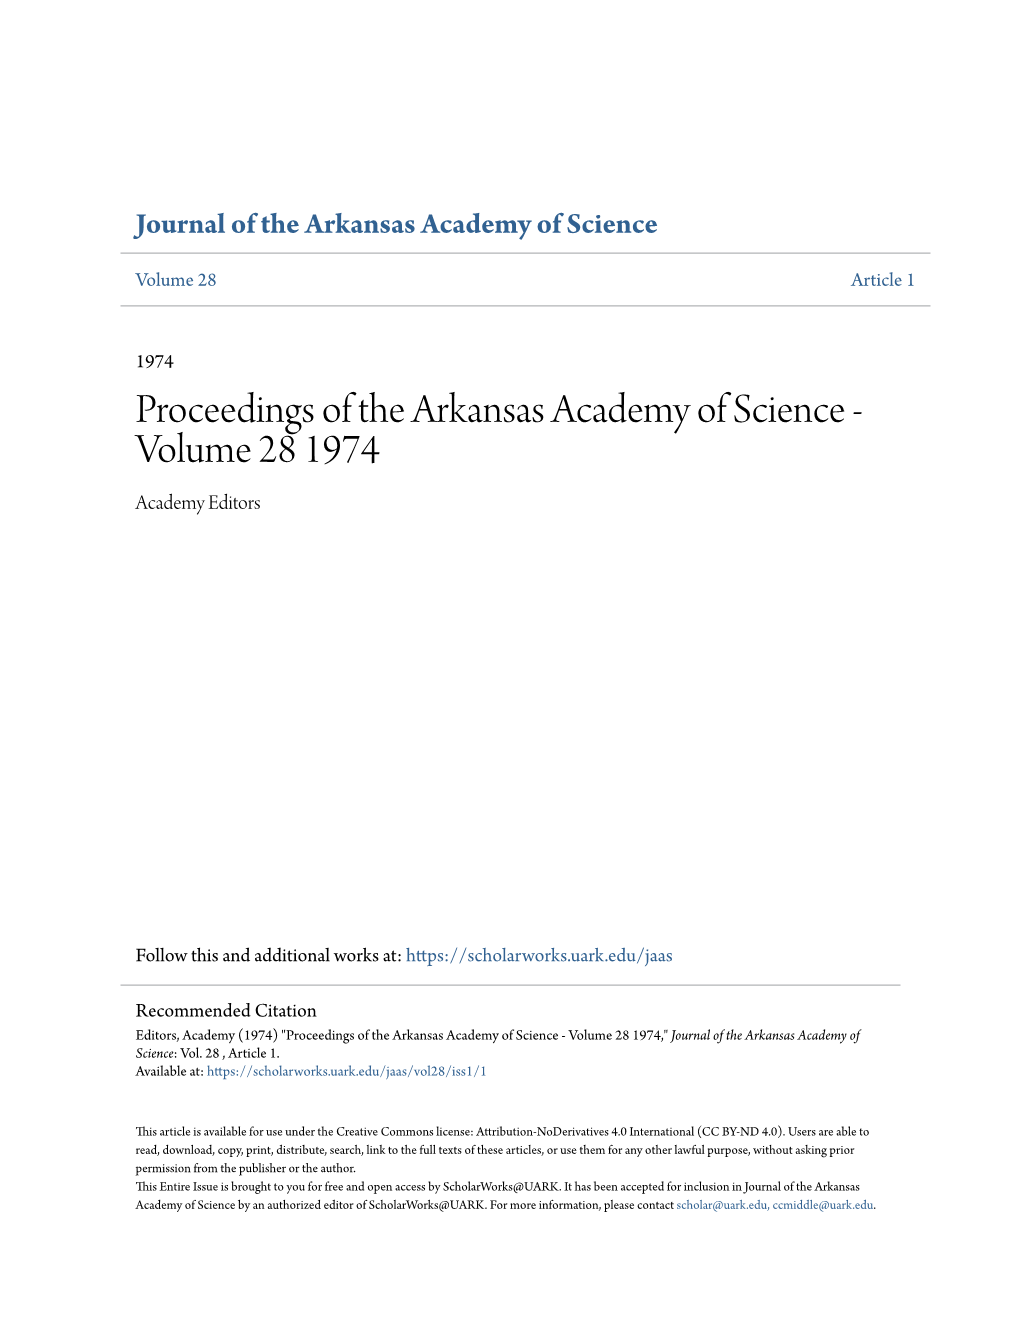 Proceedings of the Arkansas Academy of Science - Volume 28 1974 Academy Editors